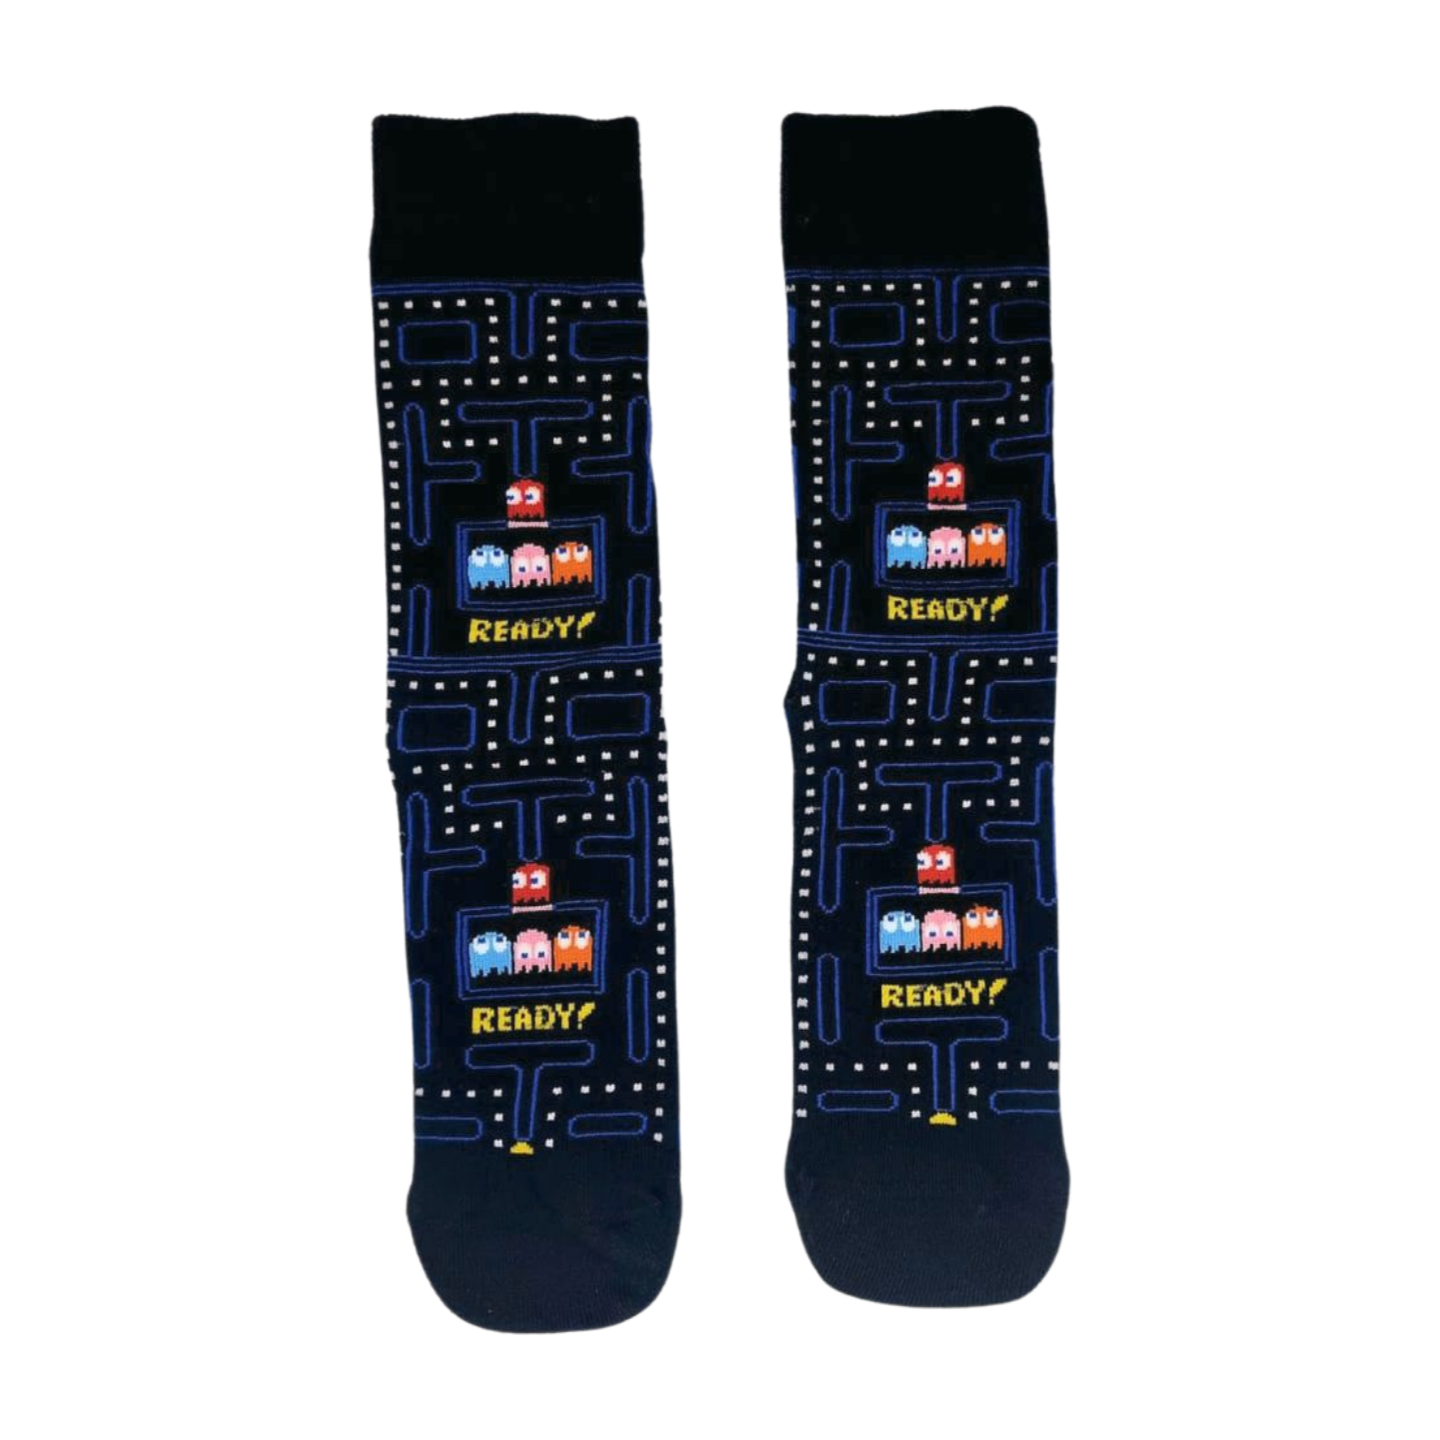 Pac-Man Arcade Game Design Socks